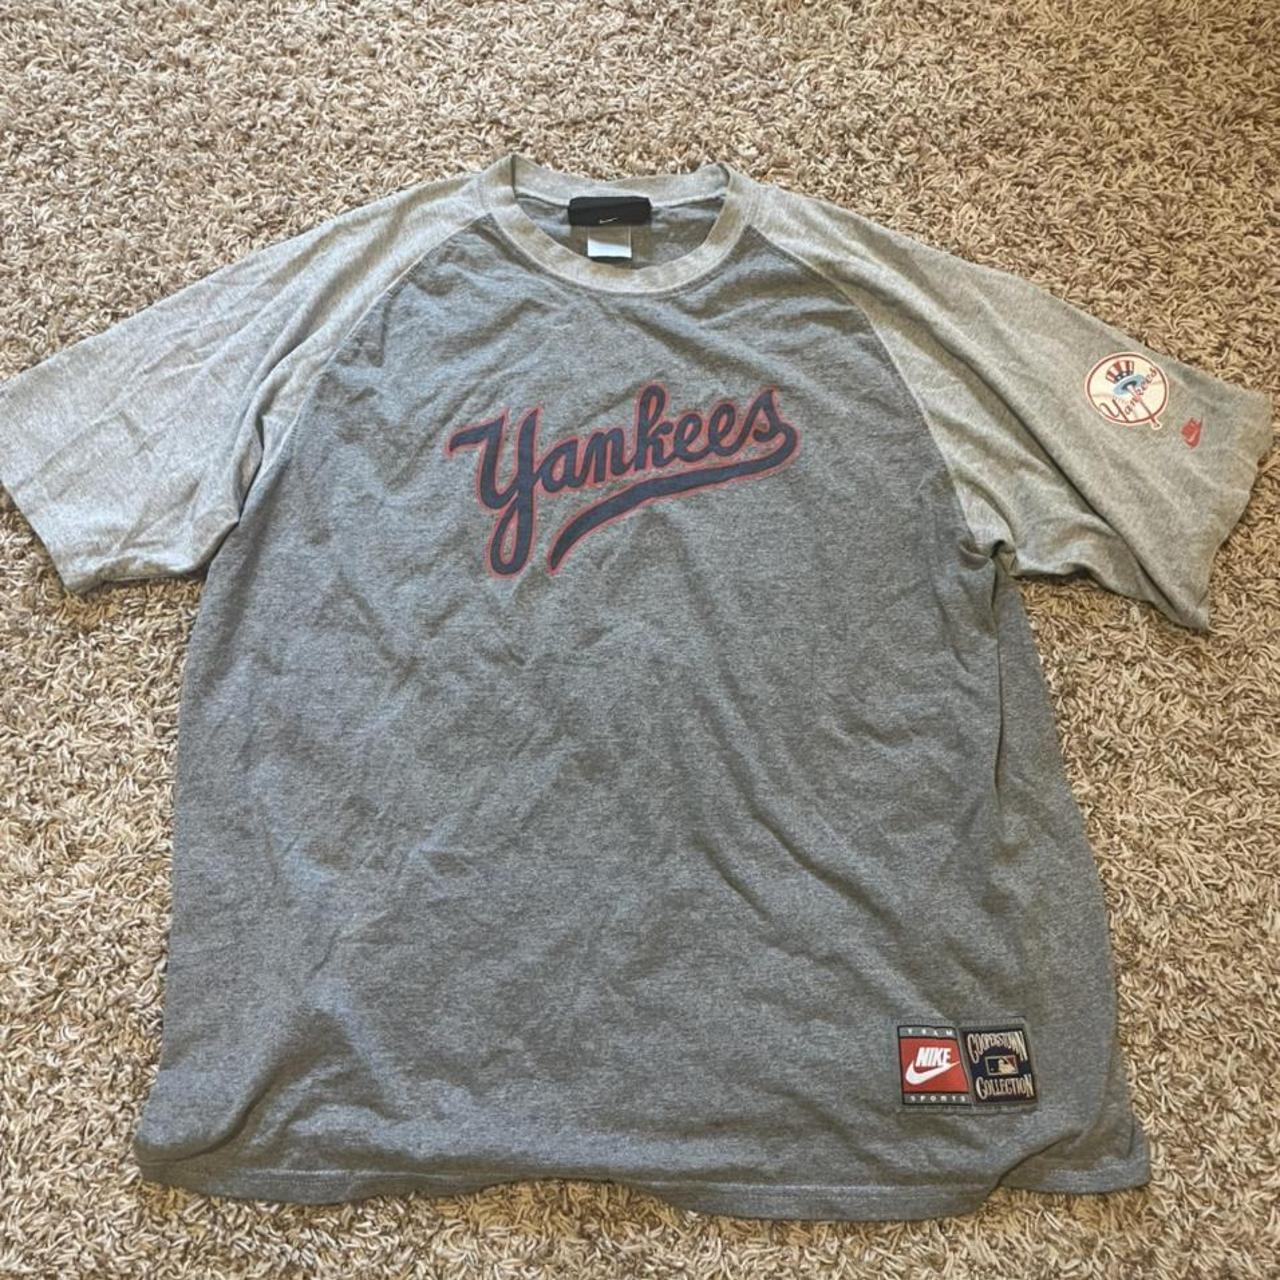 Vintage 70s Yankees baseball t shirt size - Depop